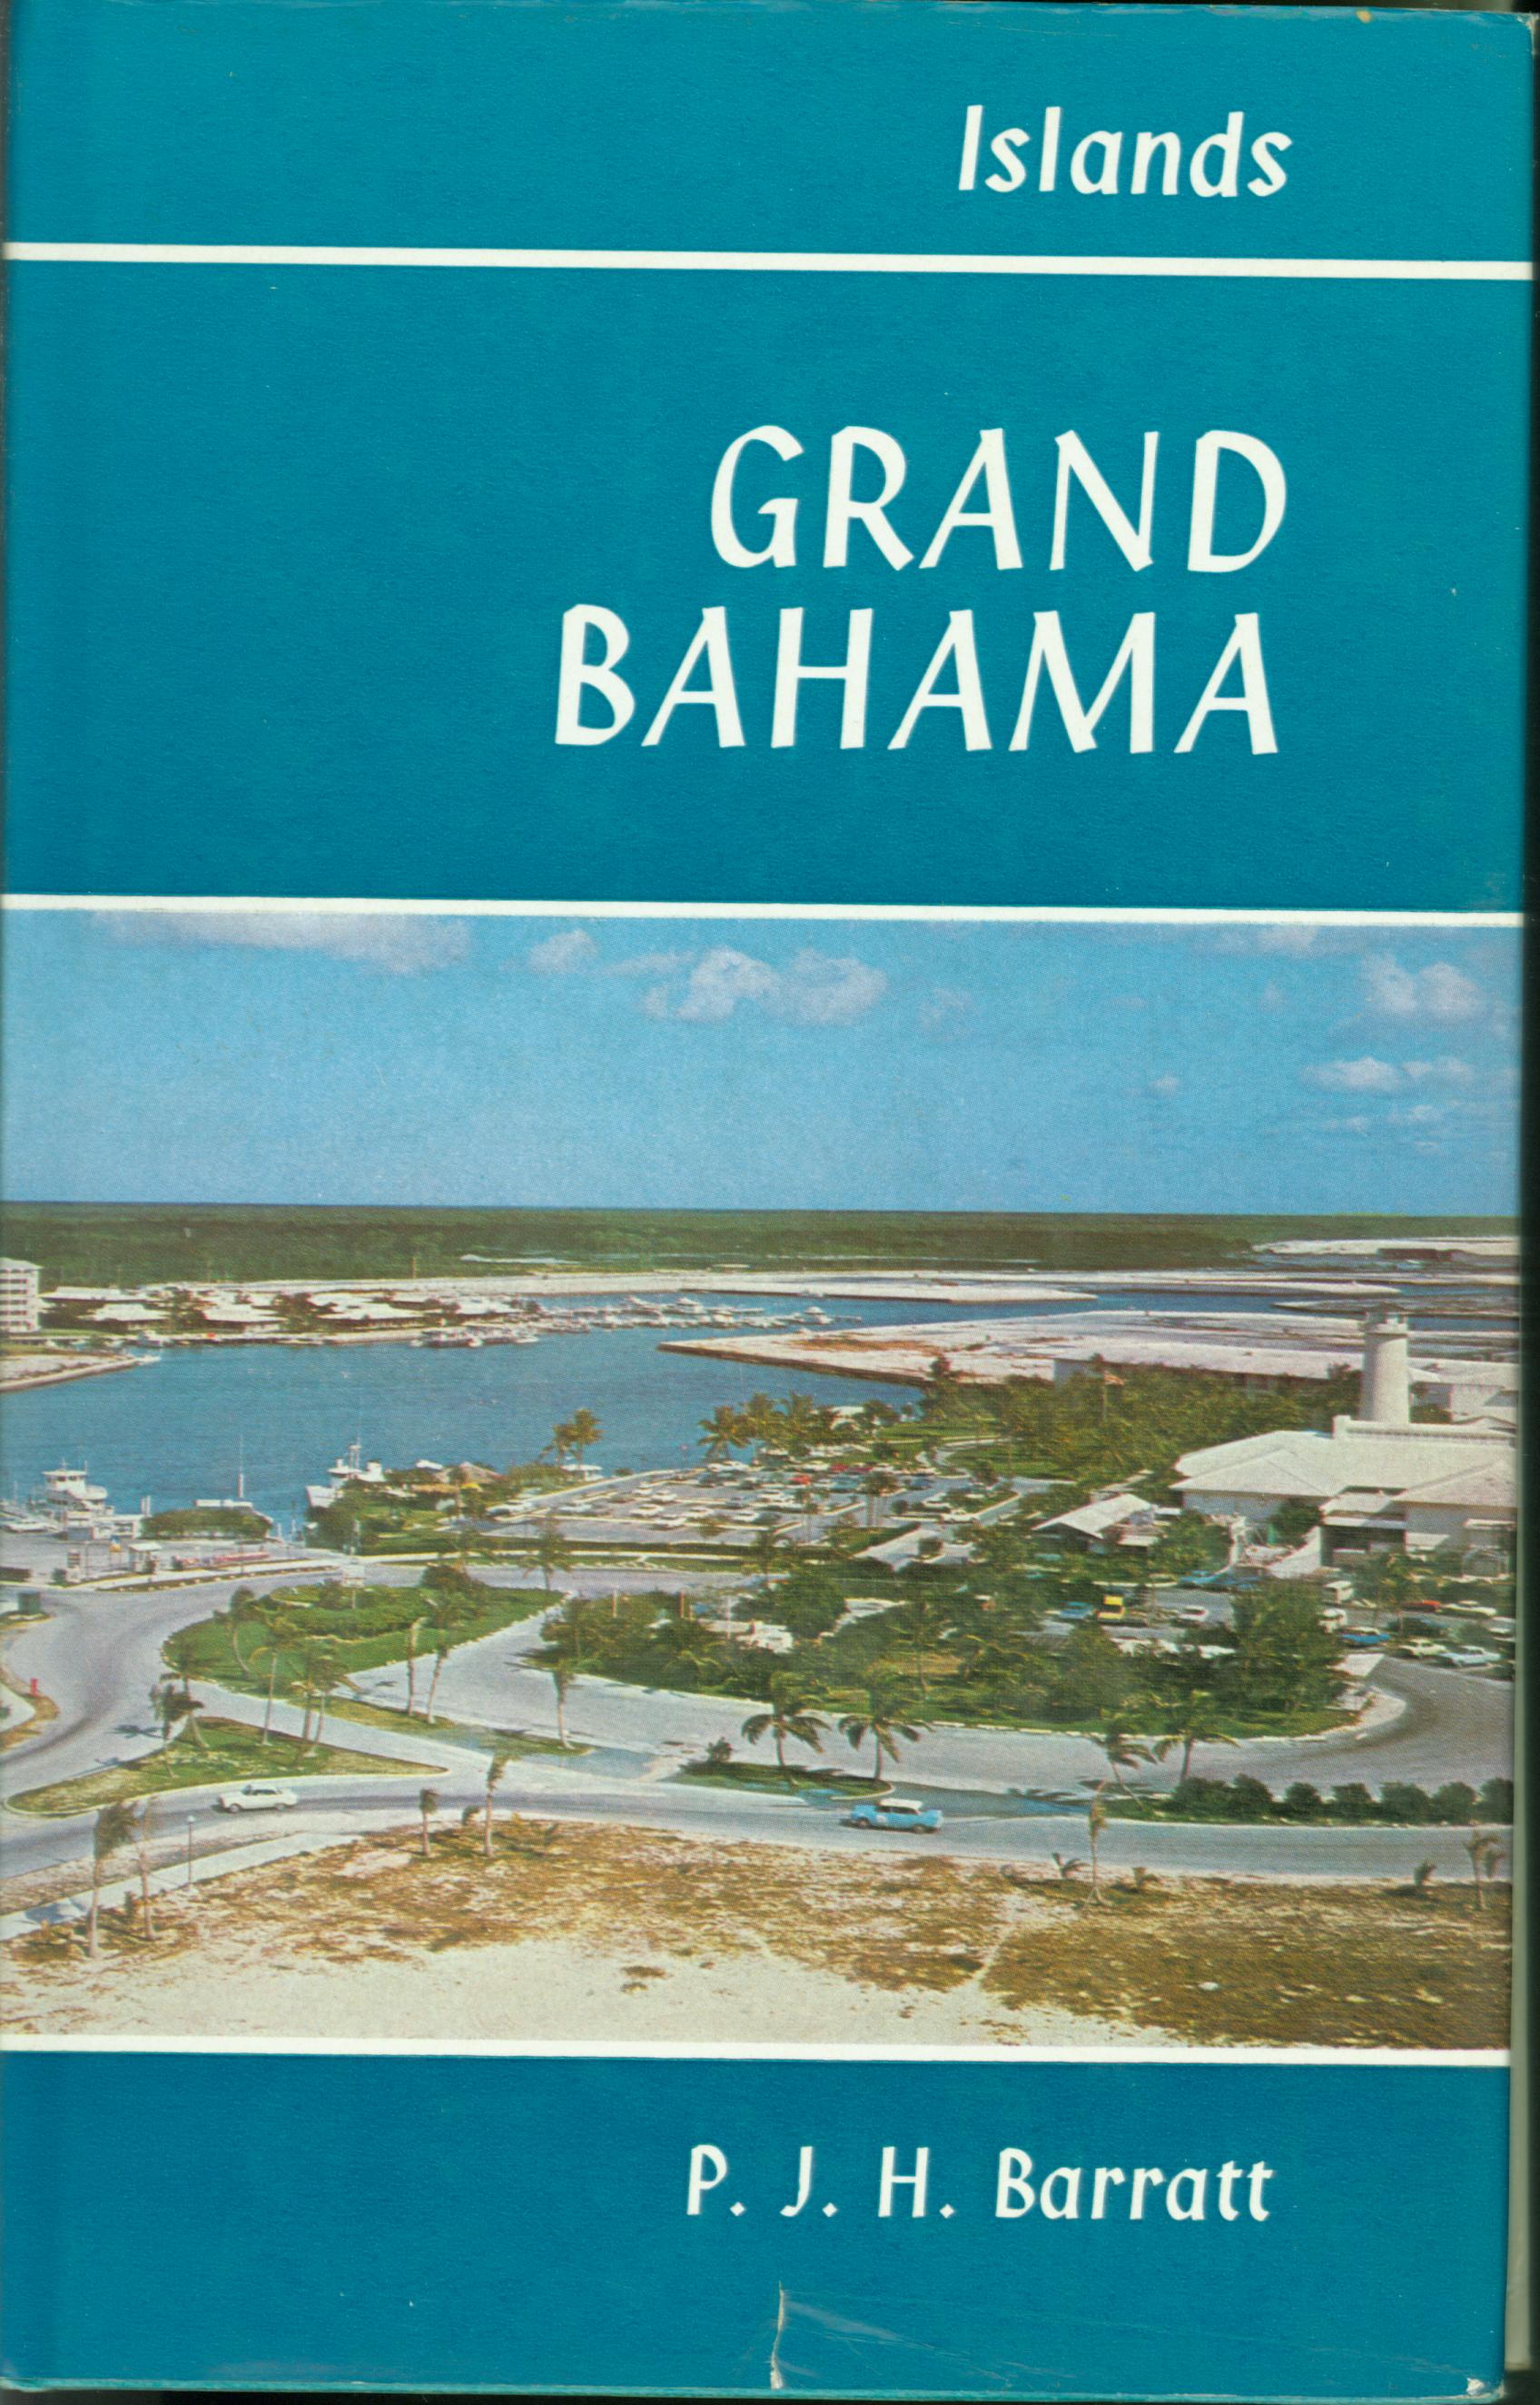 GRAND BAHAMA.